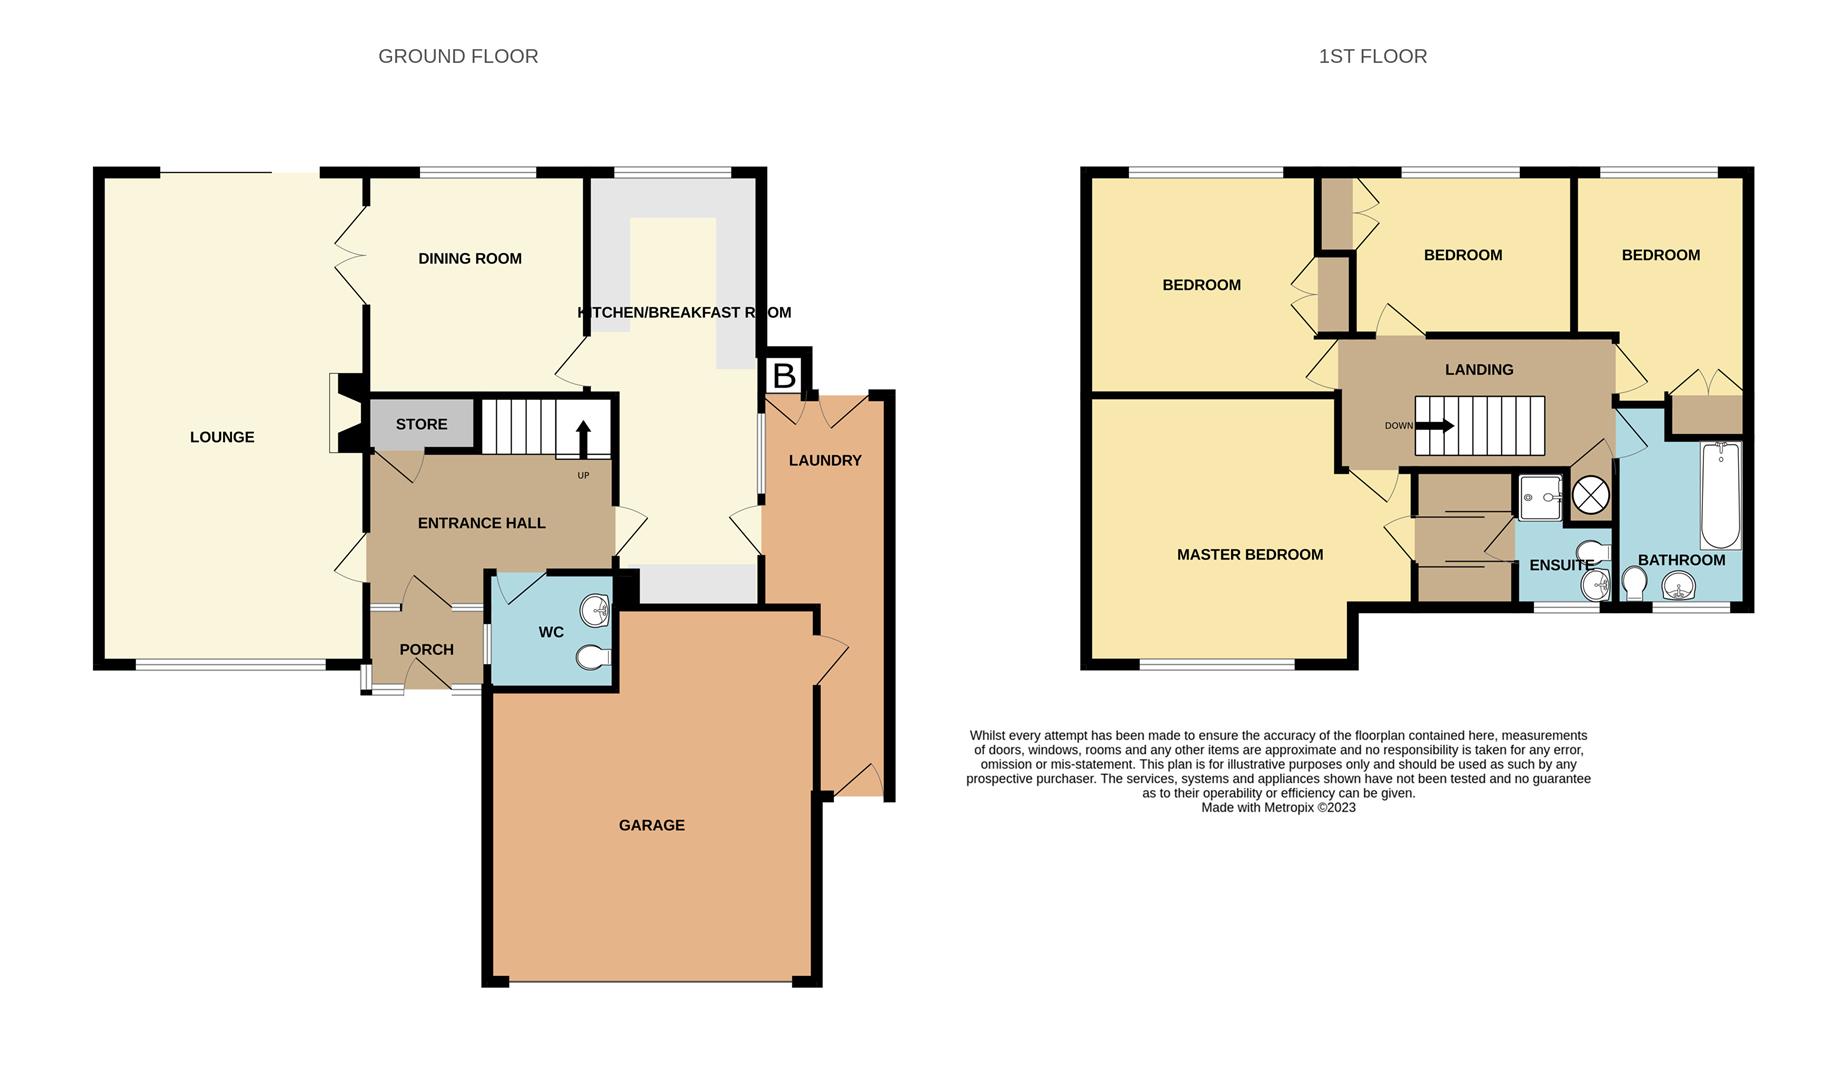 4 bed detached house for sale - Property floorplan